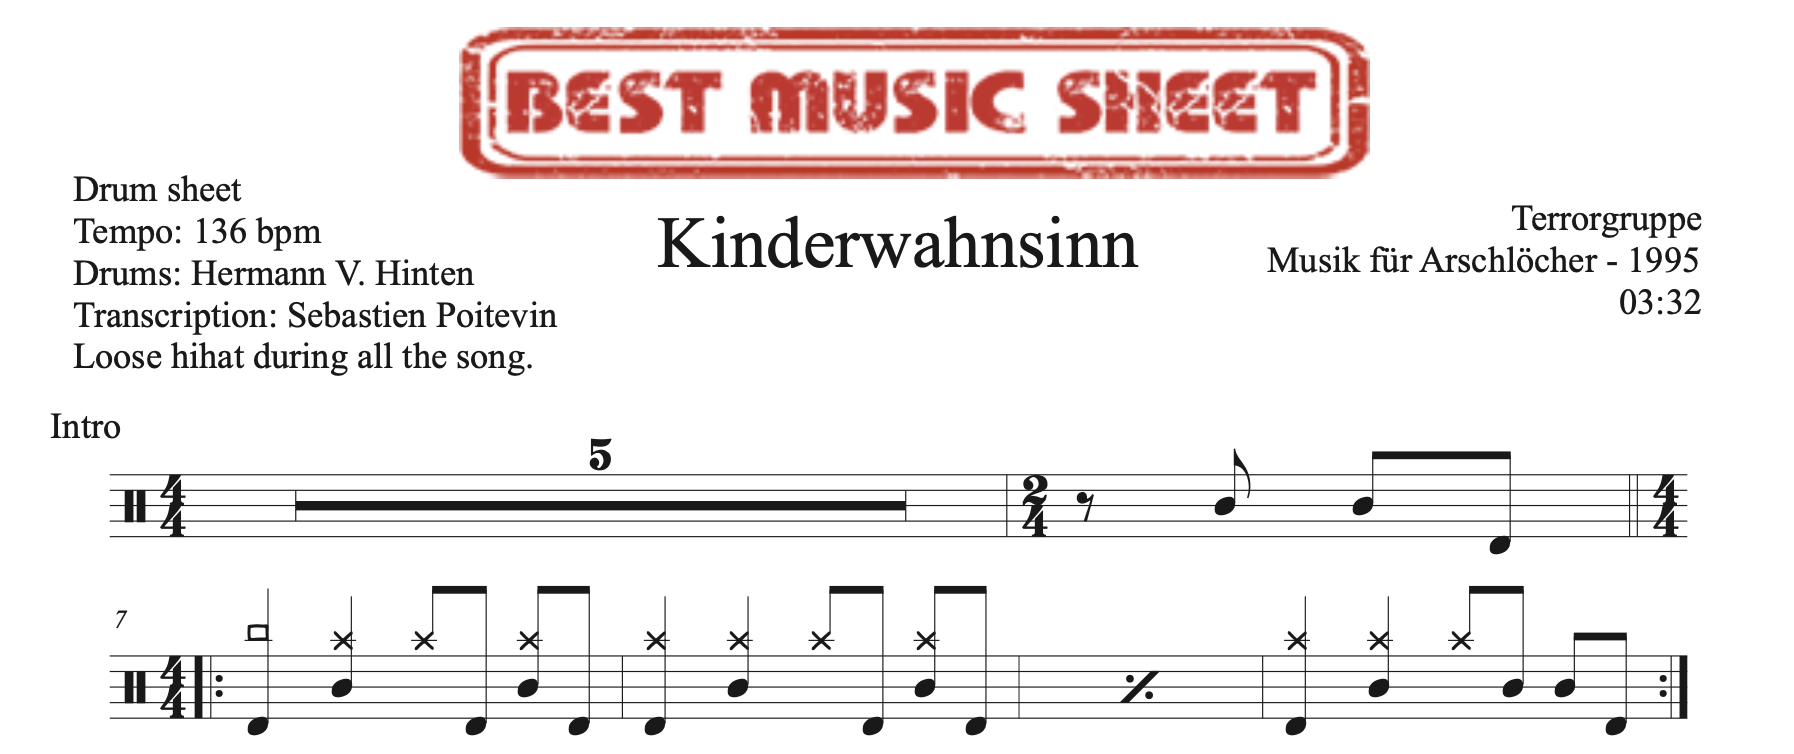 Sample drum sheet of Kinderwahnsinn by Terrorgruppe